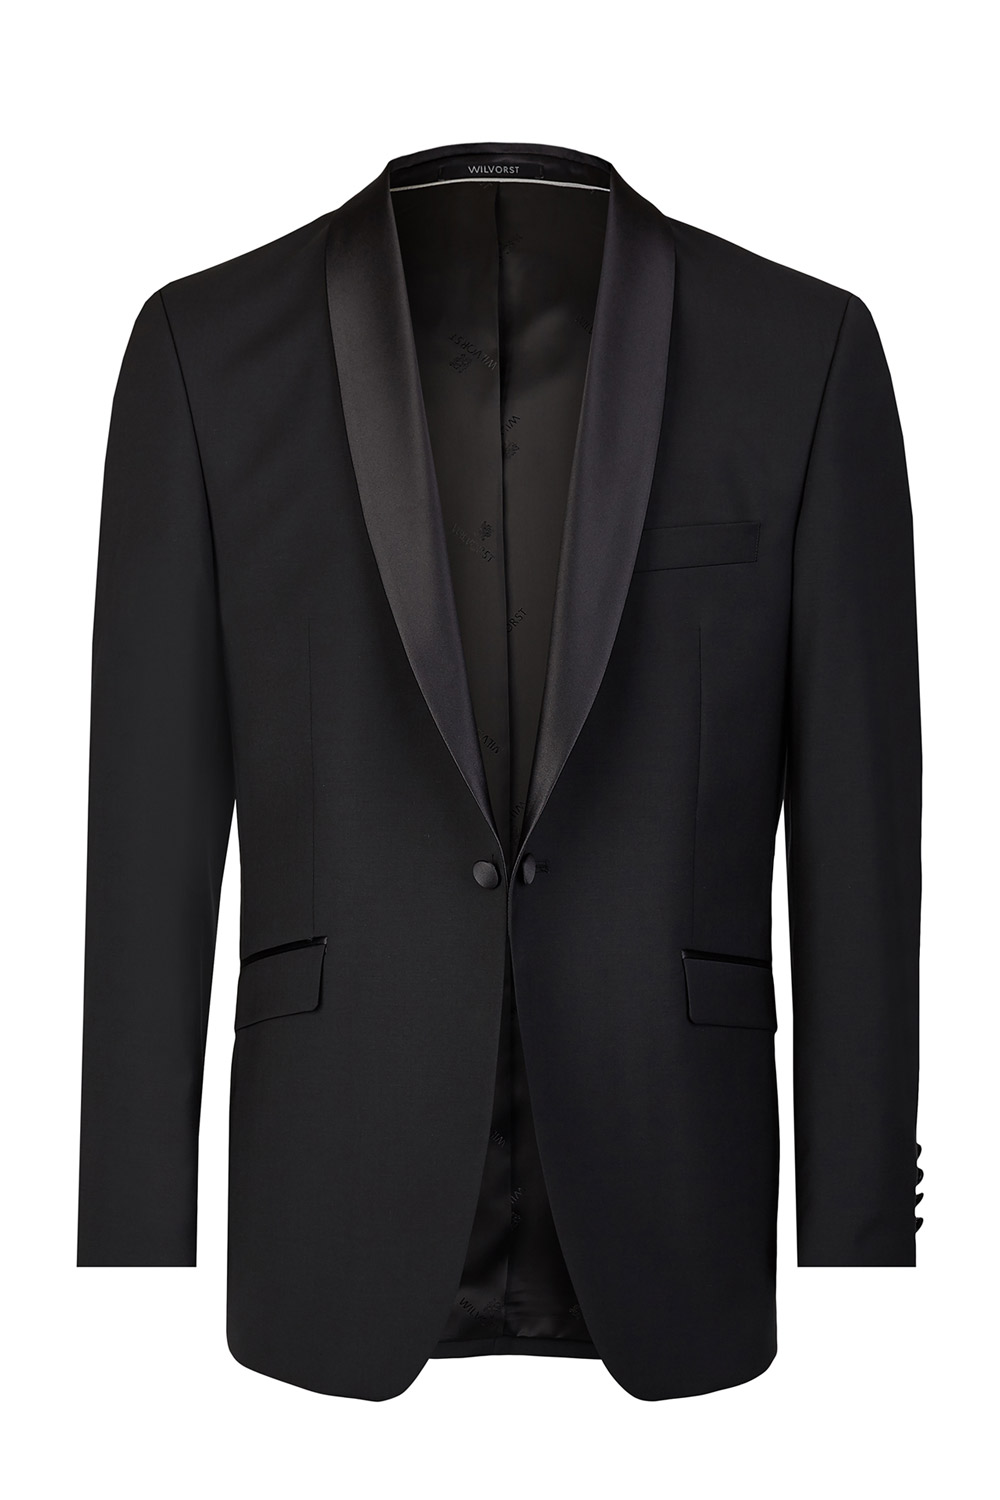 Black Tuxedo Slim Line Smoking Jacket with Silver Trim - Tom Murphy's ...